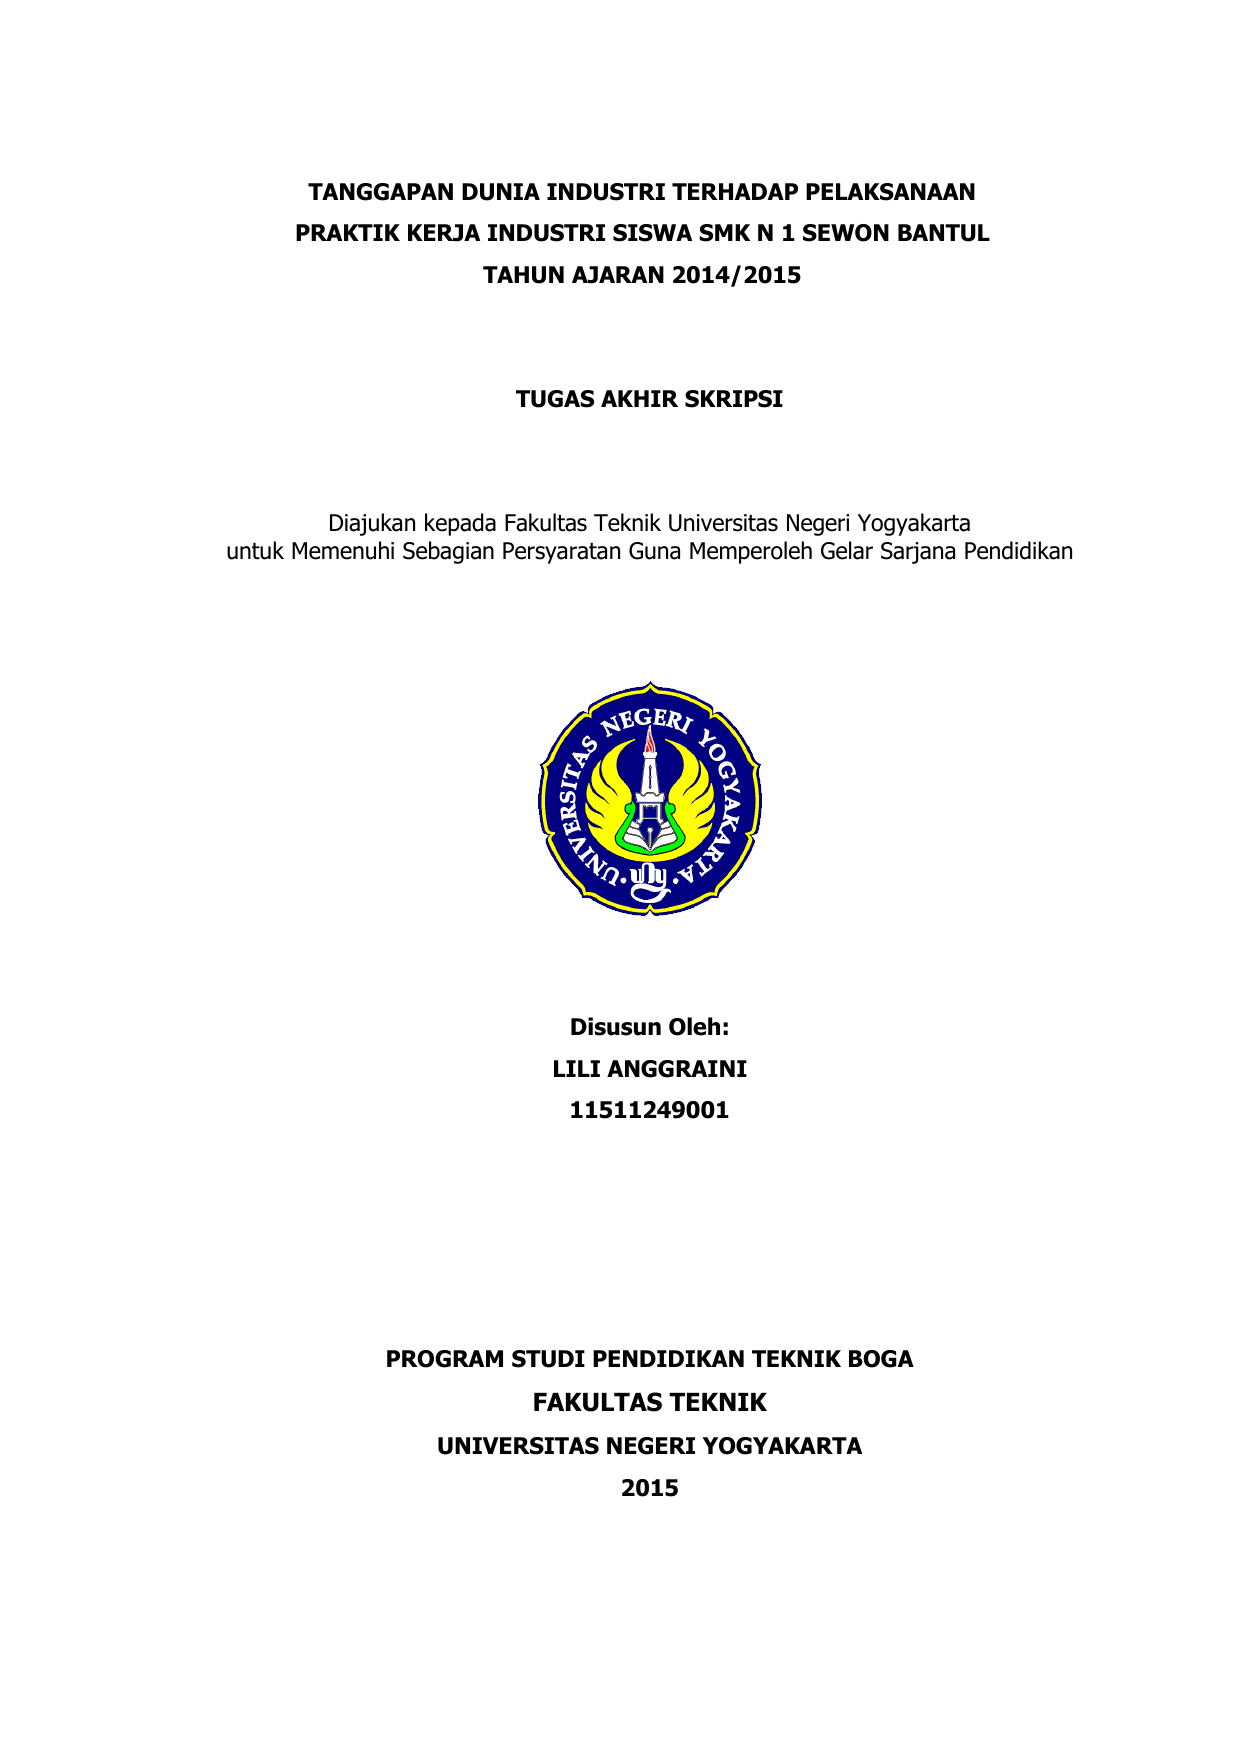 BANTUL TAHUN AJARAN 2014 2015 TUGAS AKHIR SKRIPSI Diajukan kepada Fakultas Teknik Universitas Negeri Yogyakarta untuk Memenuhi Sebagian Persyaratan Guna